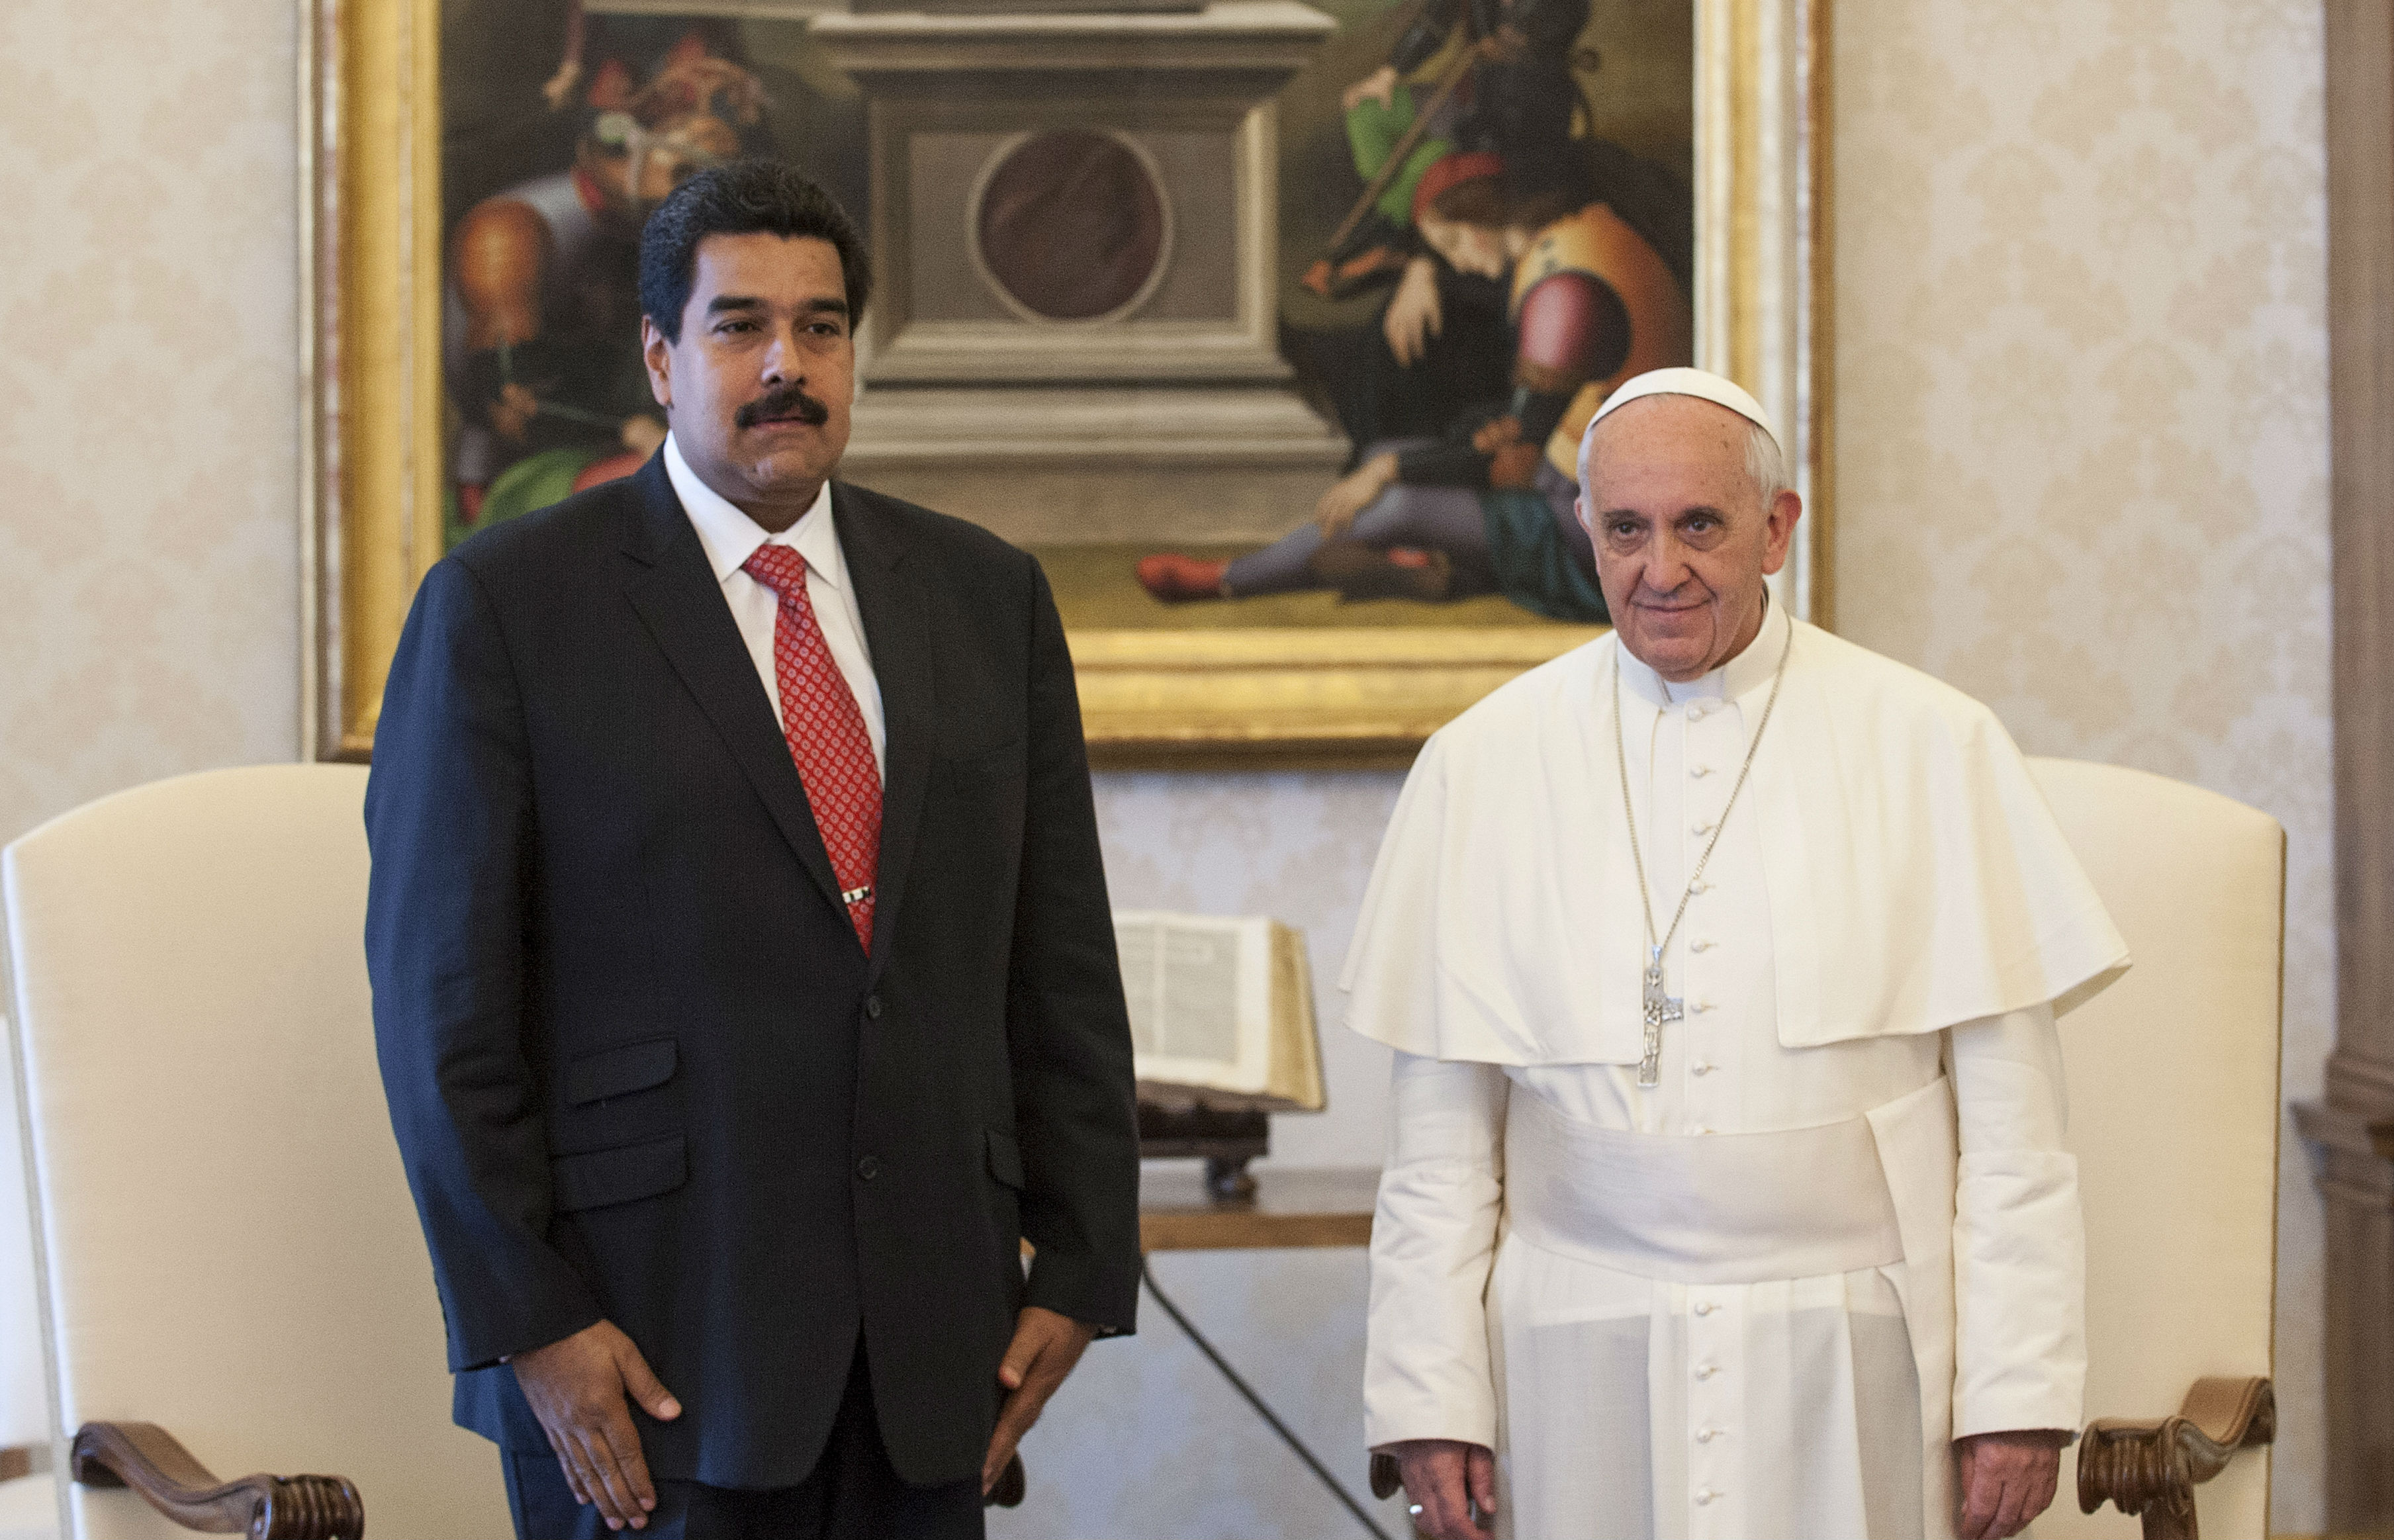 Venezuelan President meets Pope as country teeters towards political crisis